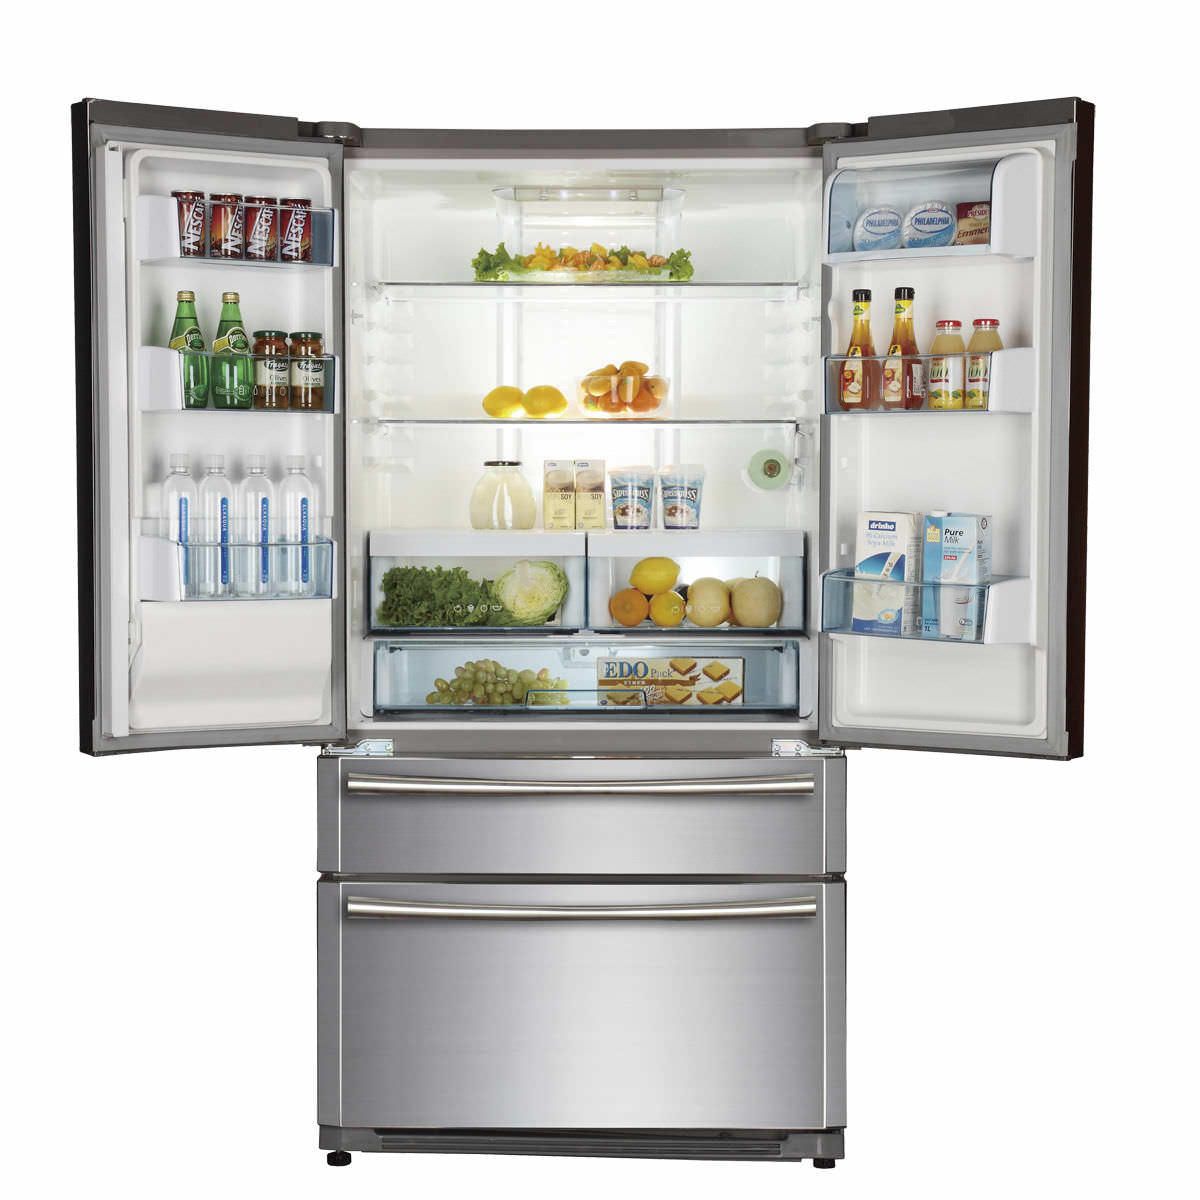 В каких магазинах можно купить холодильники. Холодильник многодверный Haier hb25fsnaaaru. Многокамерный холодильник Haier. Холодильник Хайер многодверный. Холодильник Haier hb16fmaaa.